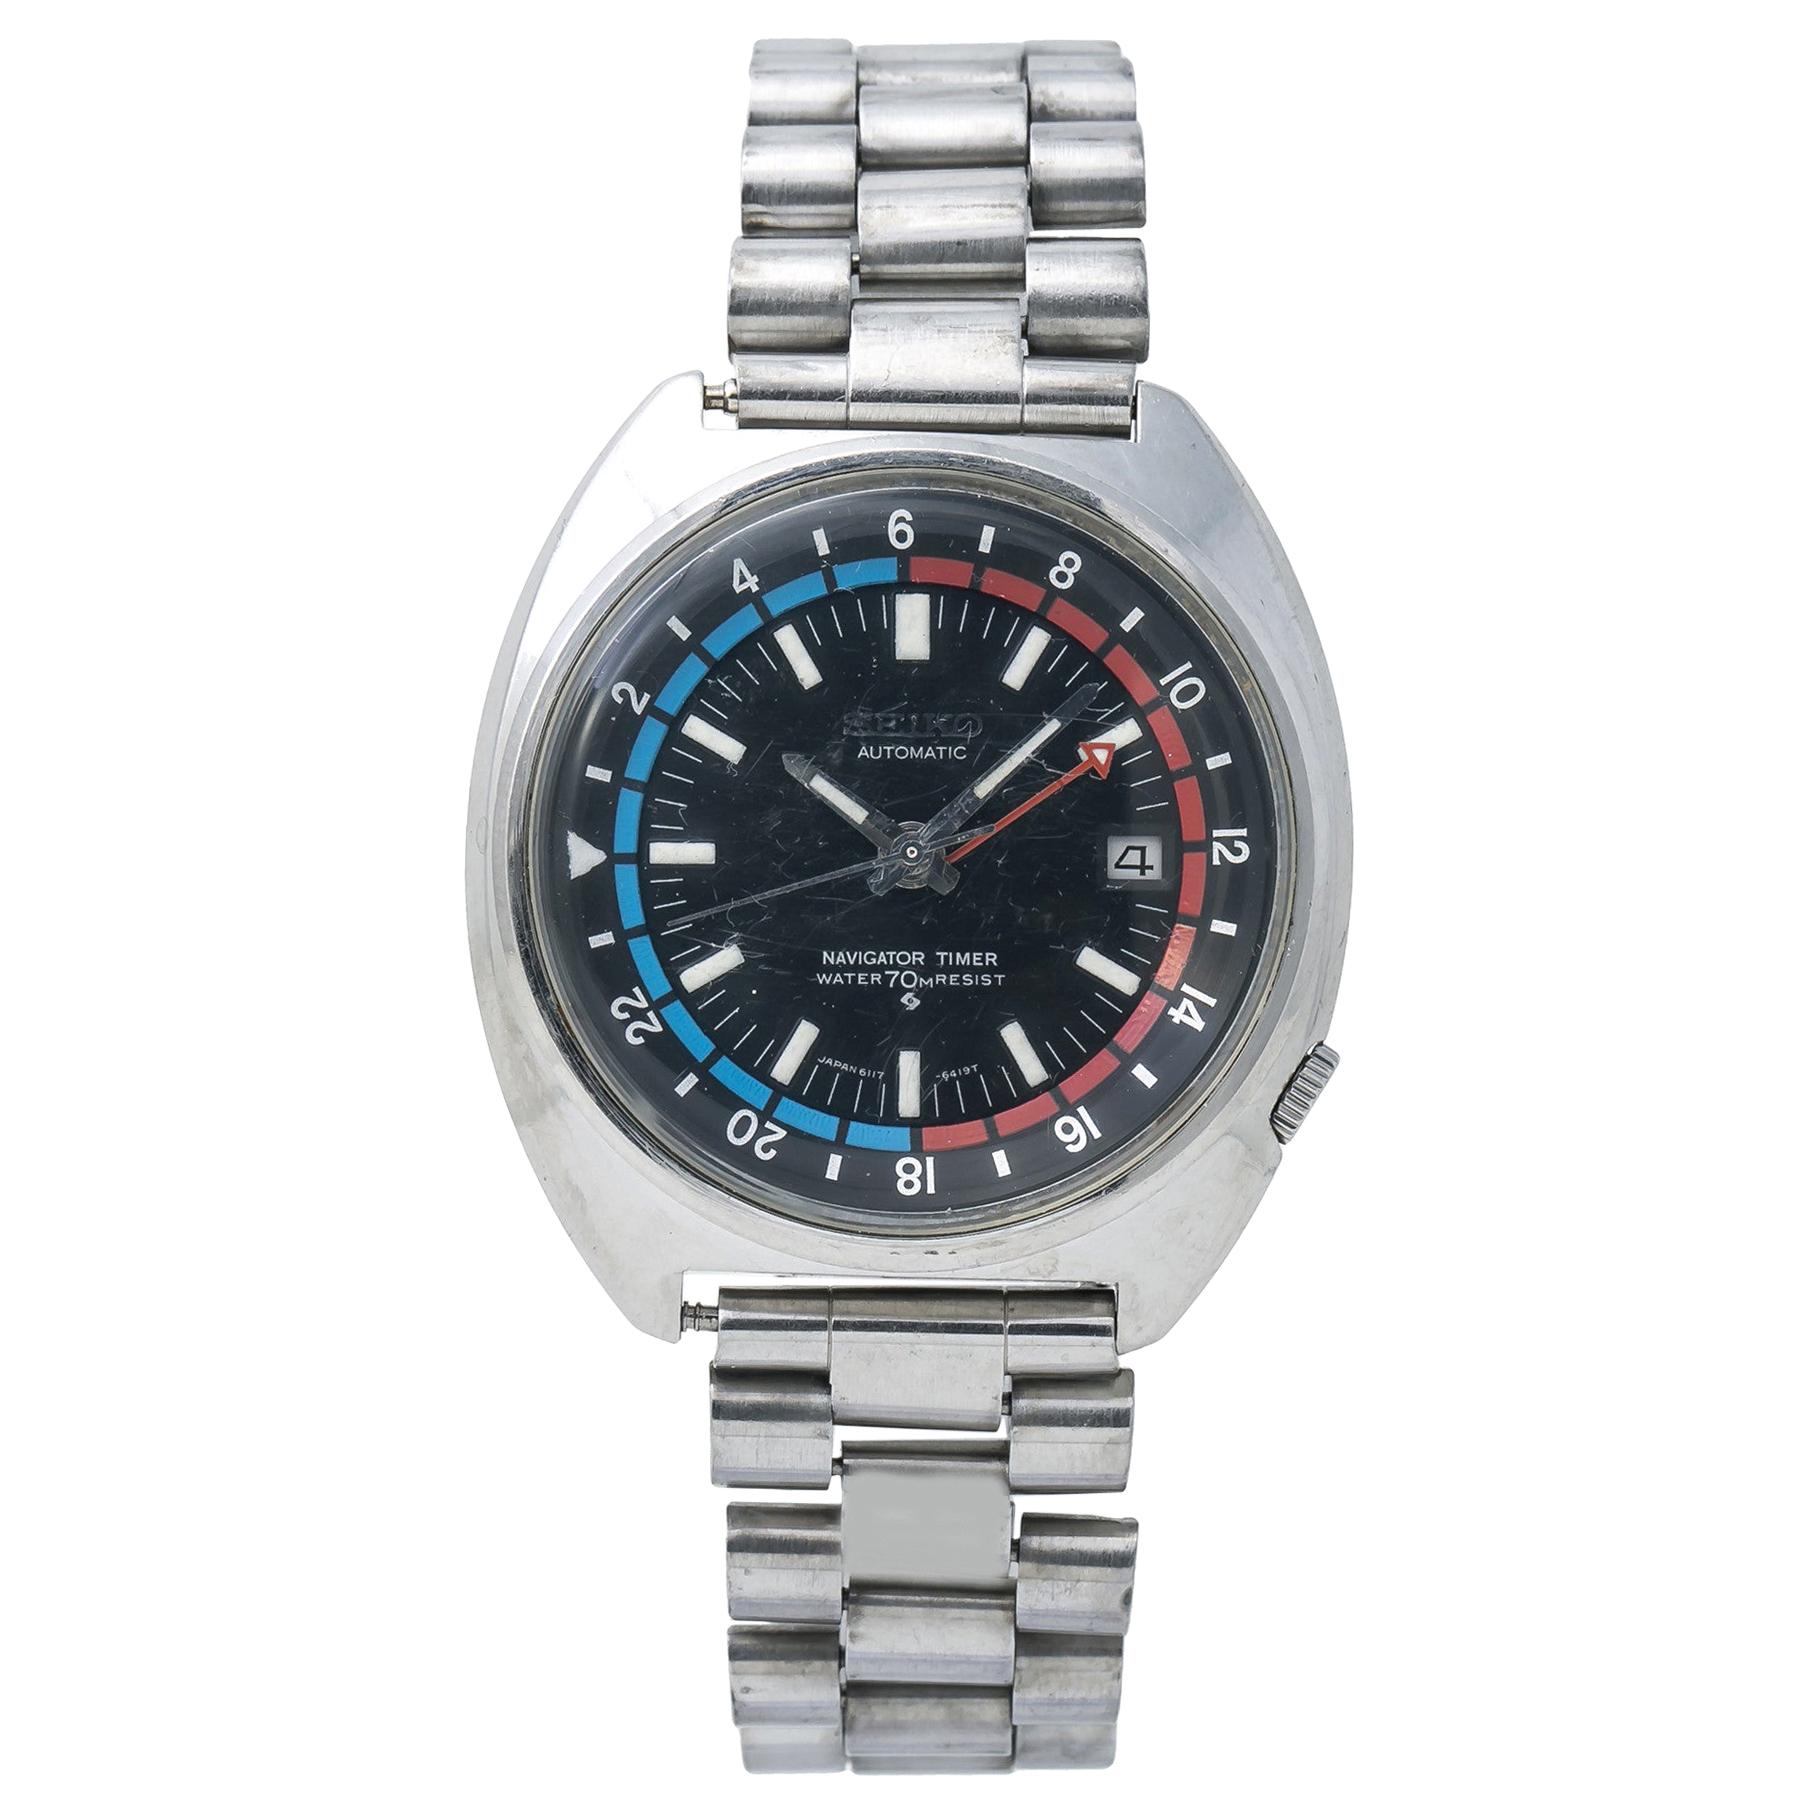 Seiko Navigator Timer 6117-6410, Black Dial, Certified and Warranty at  1stDibs | seiko automatic navigator timer